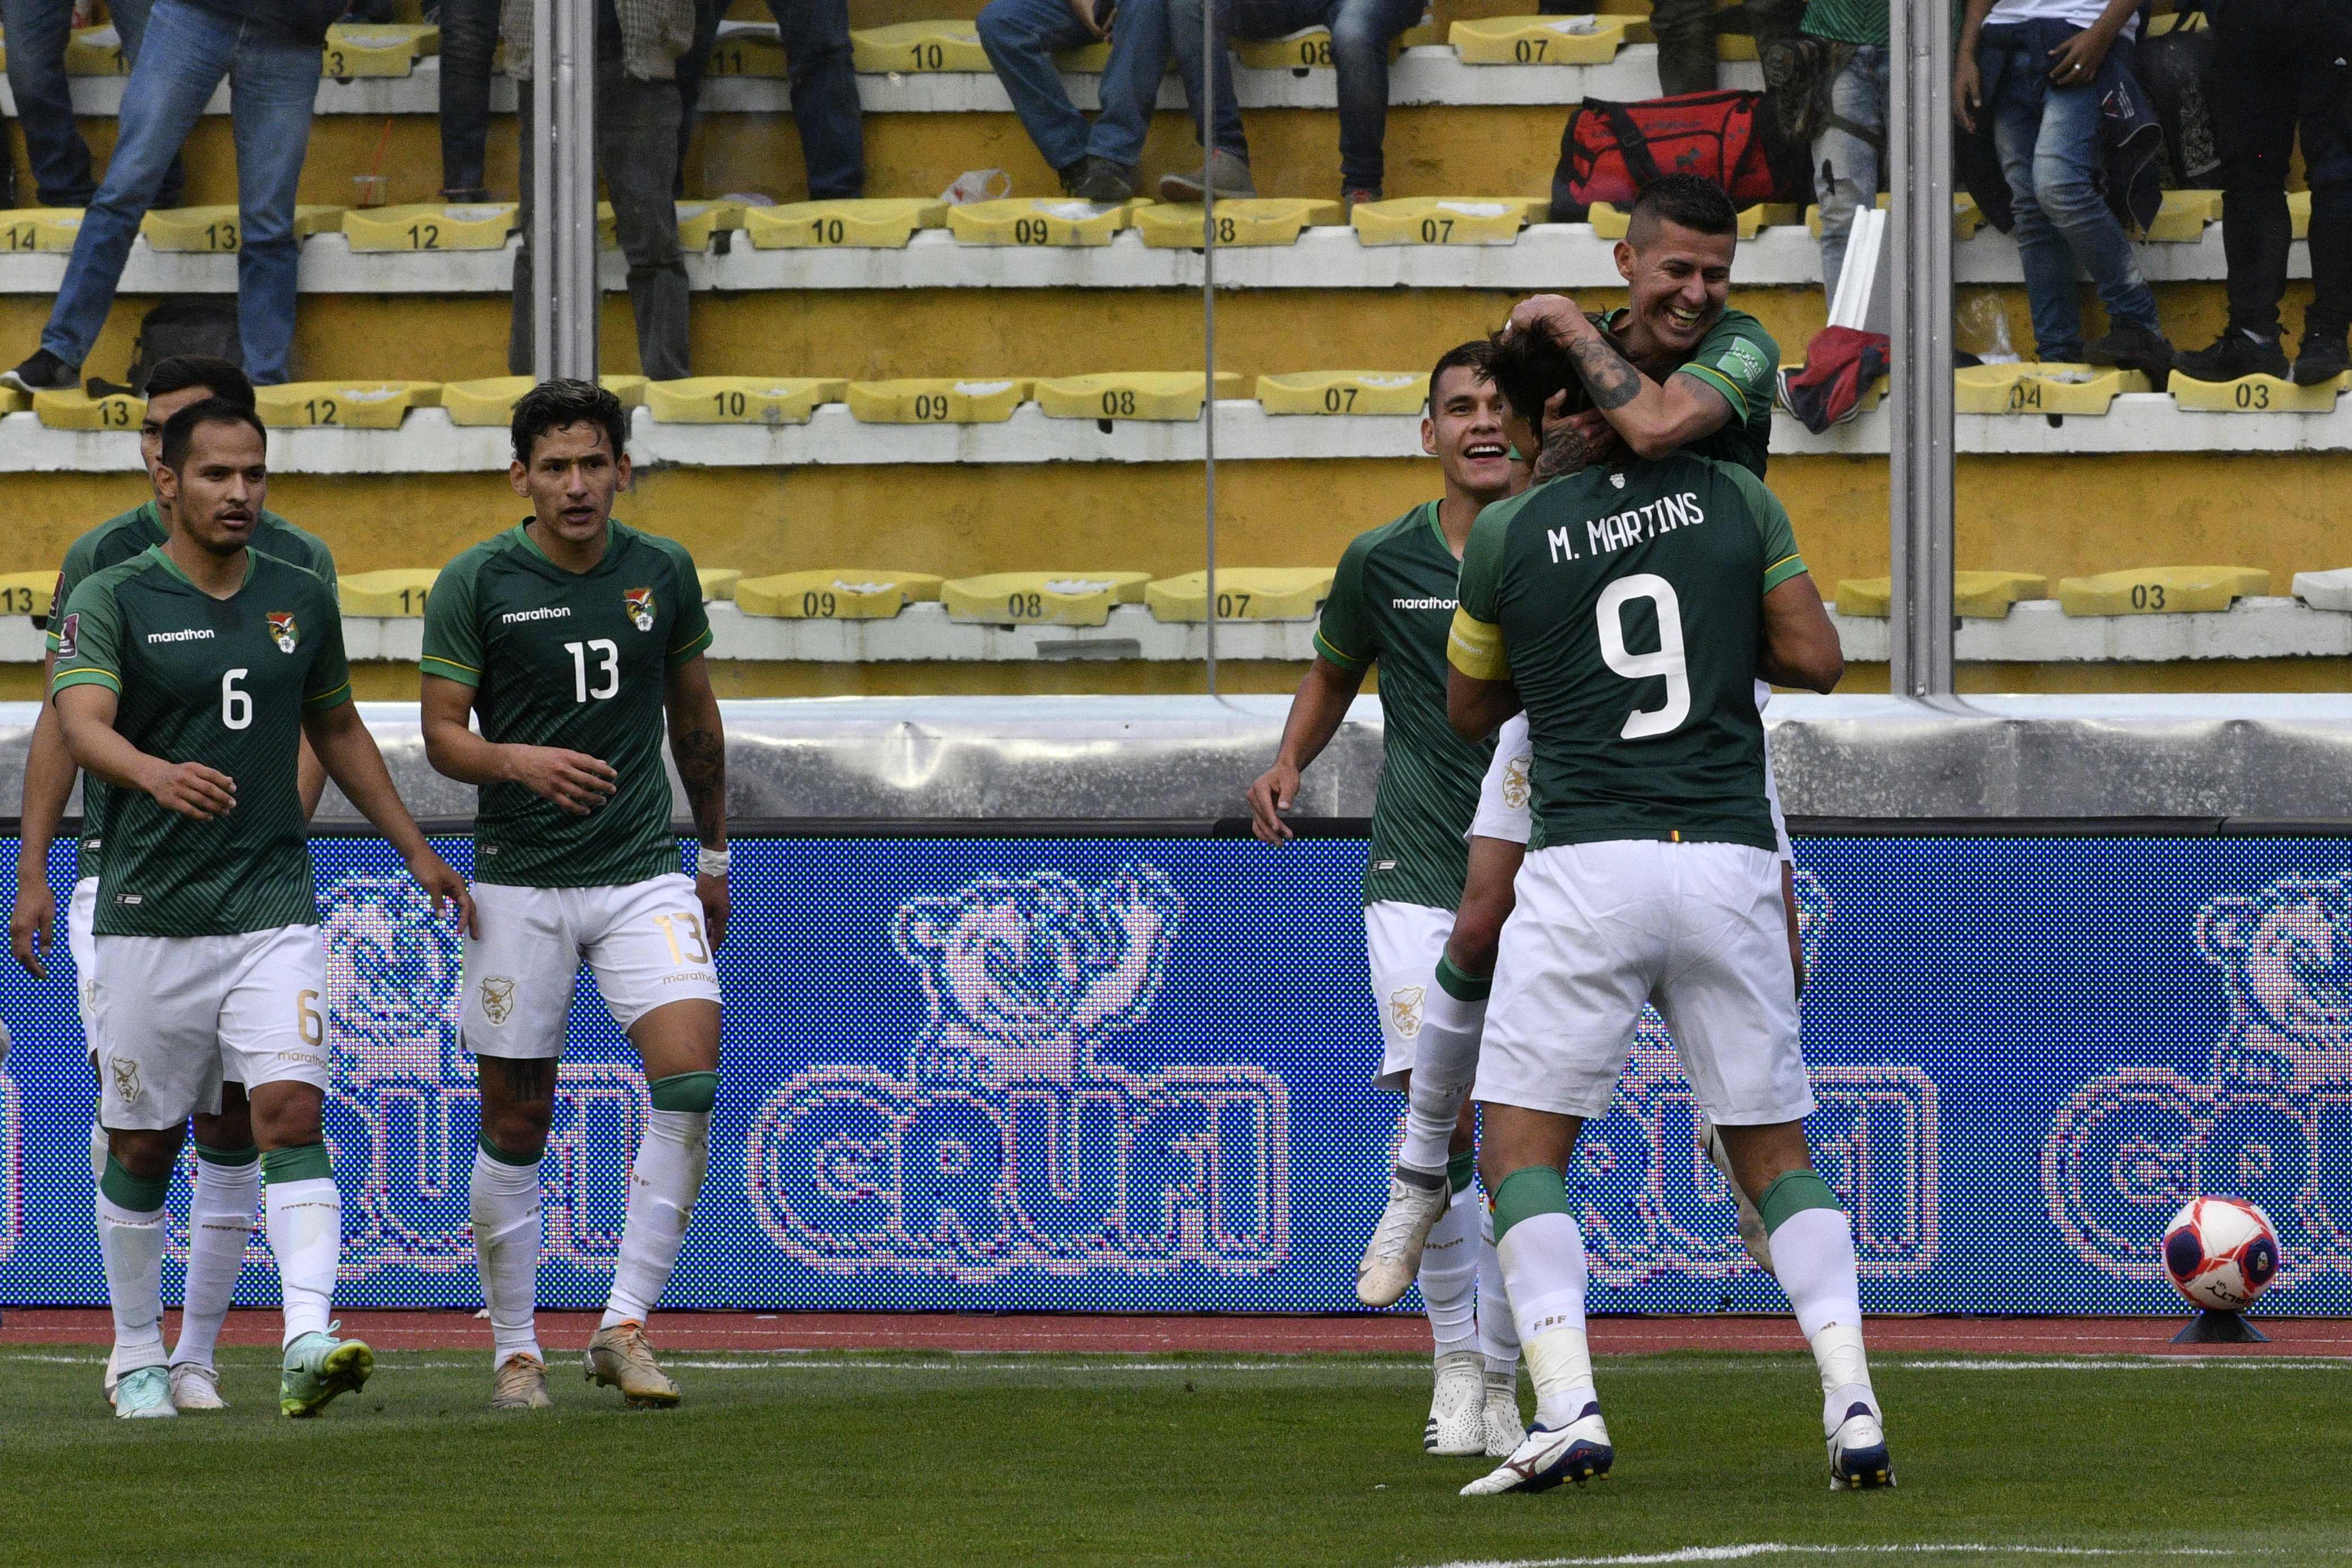 EN VIVO CLASIFICATORIAS, Uruguay 3-0 Bolivia (Final)